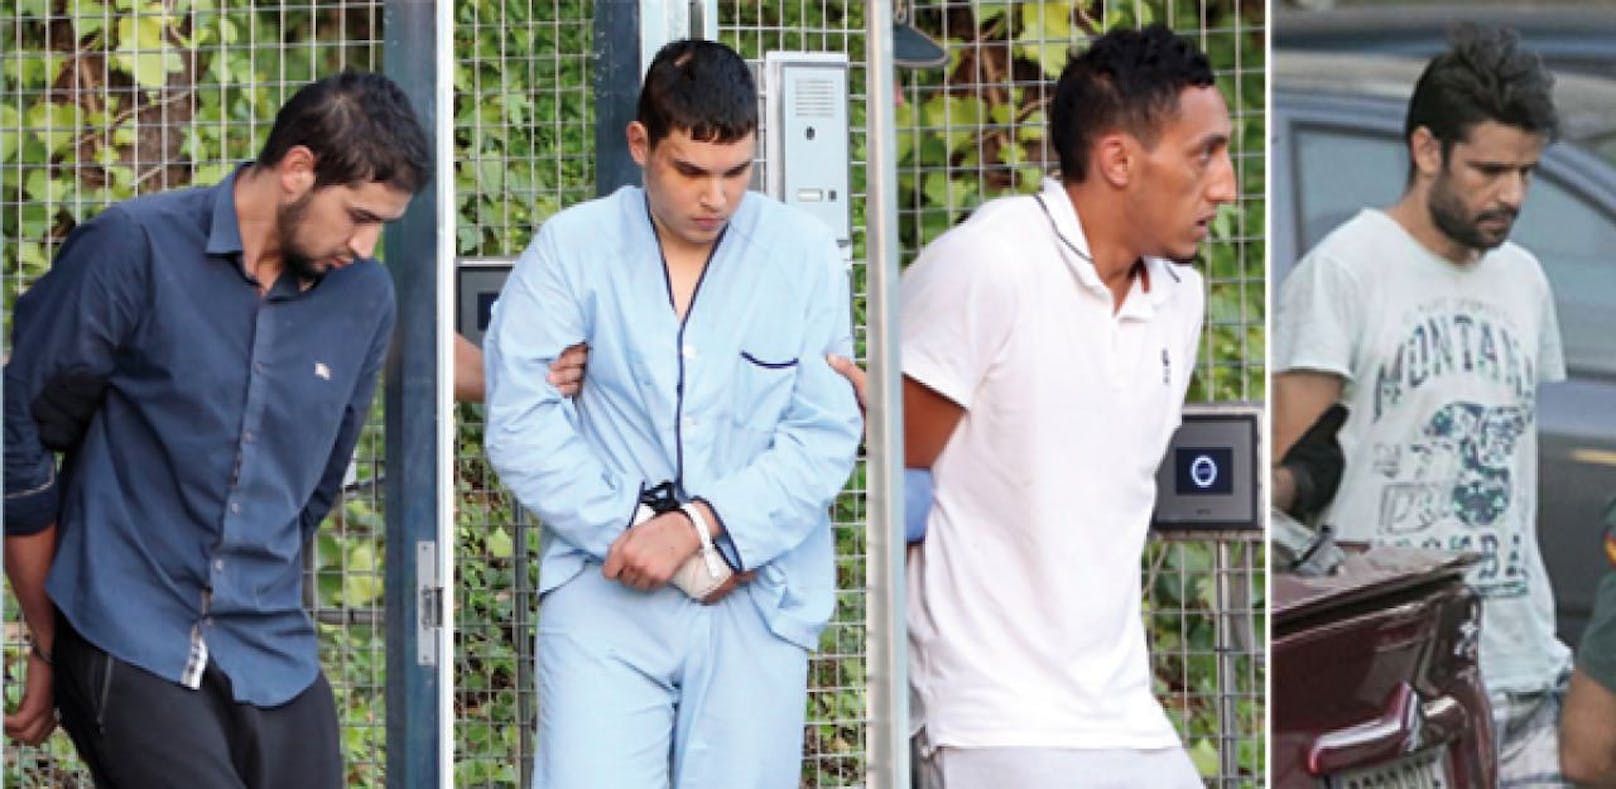 Salah El Karib, Mohamed Houli Chemlal, Driss Oukabir und Mohamed Aallaa auf dem Weg zum Haftrichter.